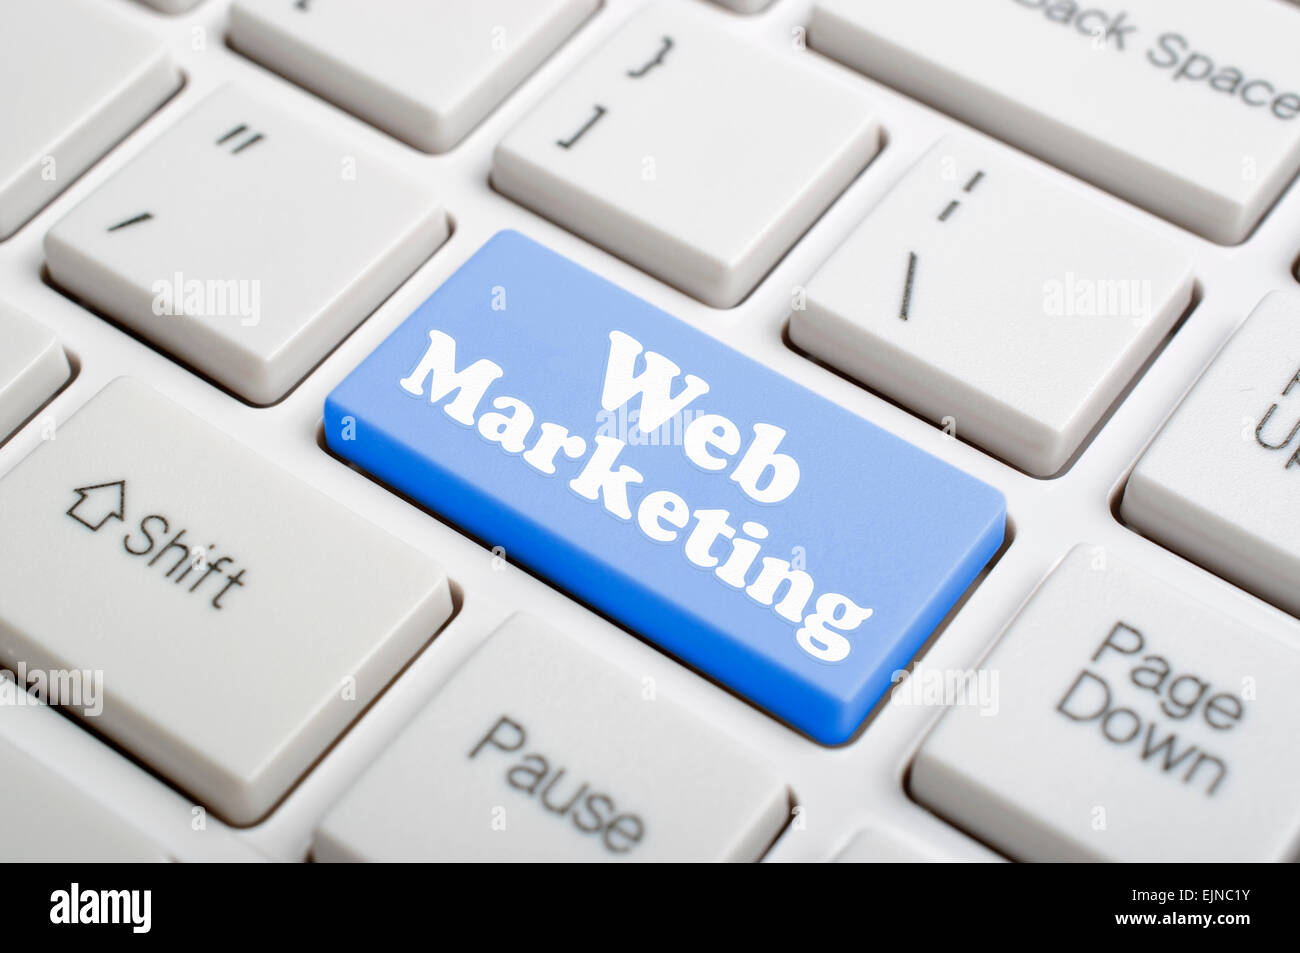 Blue web marketing key on keyboard Stock Photo